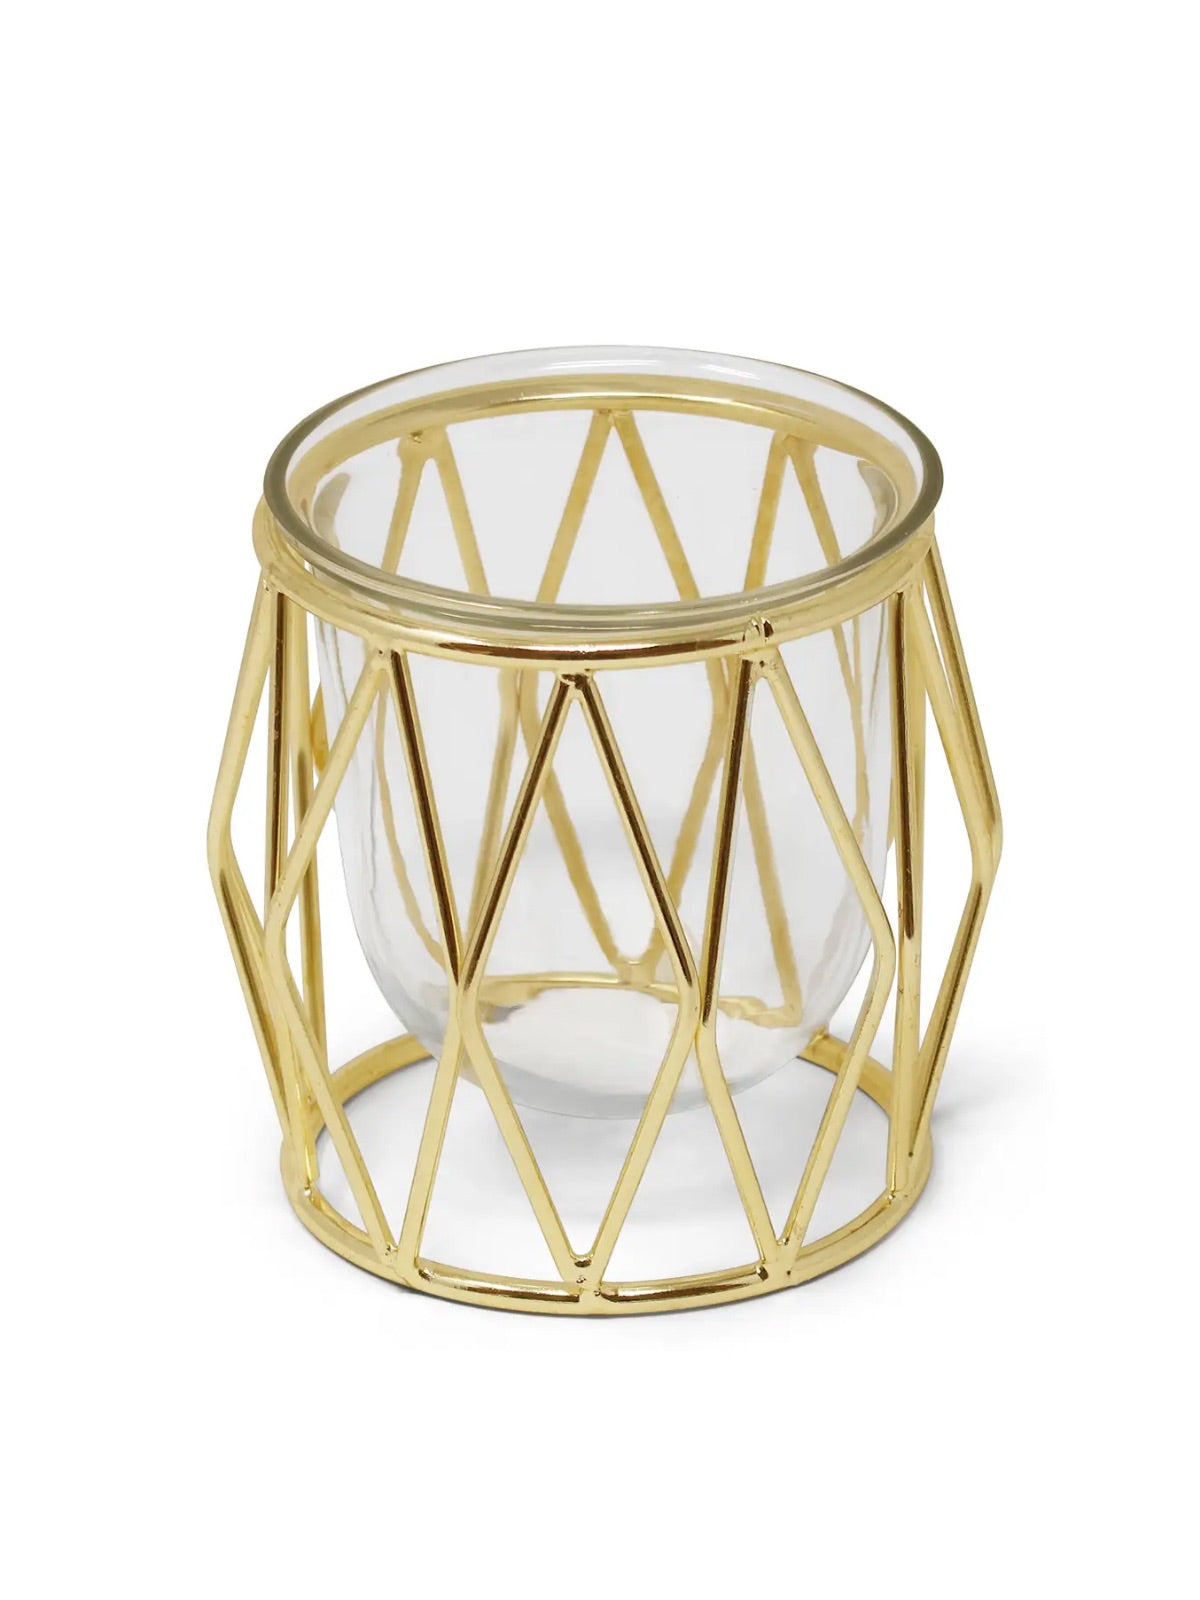 Brass Gold Diamond Shaped Hurricane Candle Holder - Luxury Home Decor.